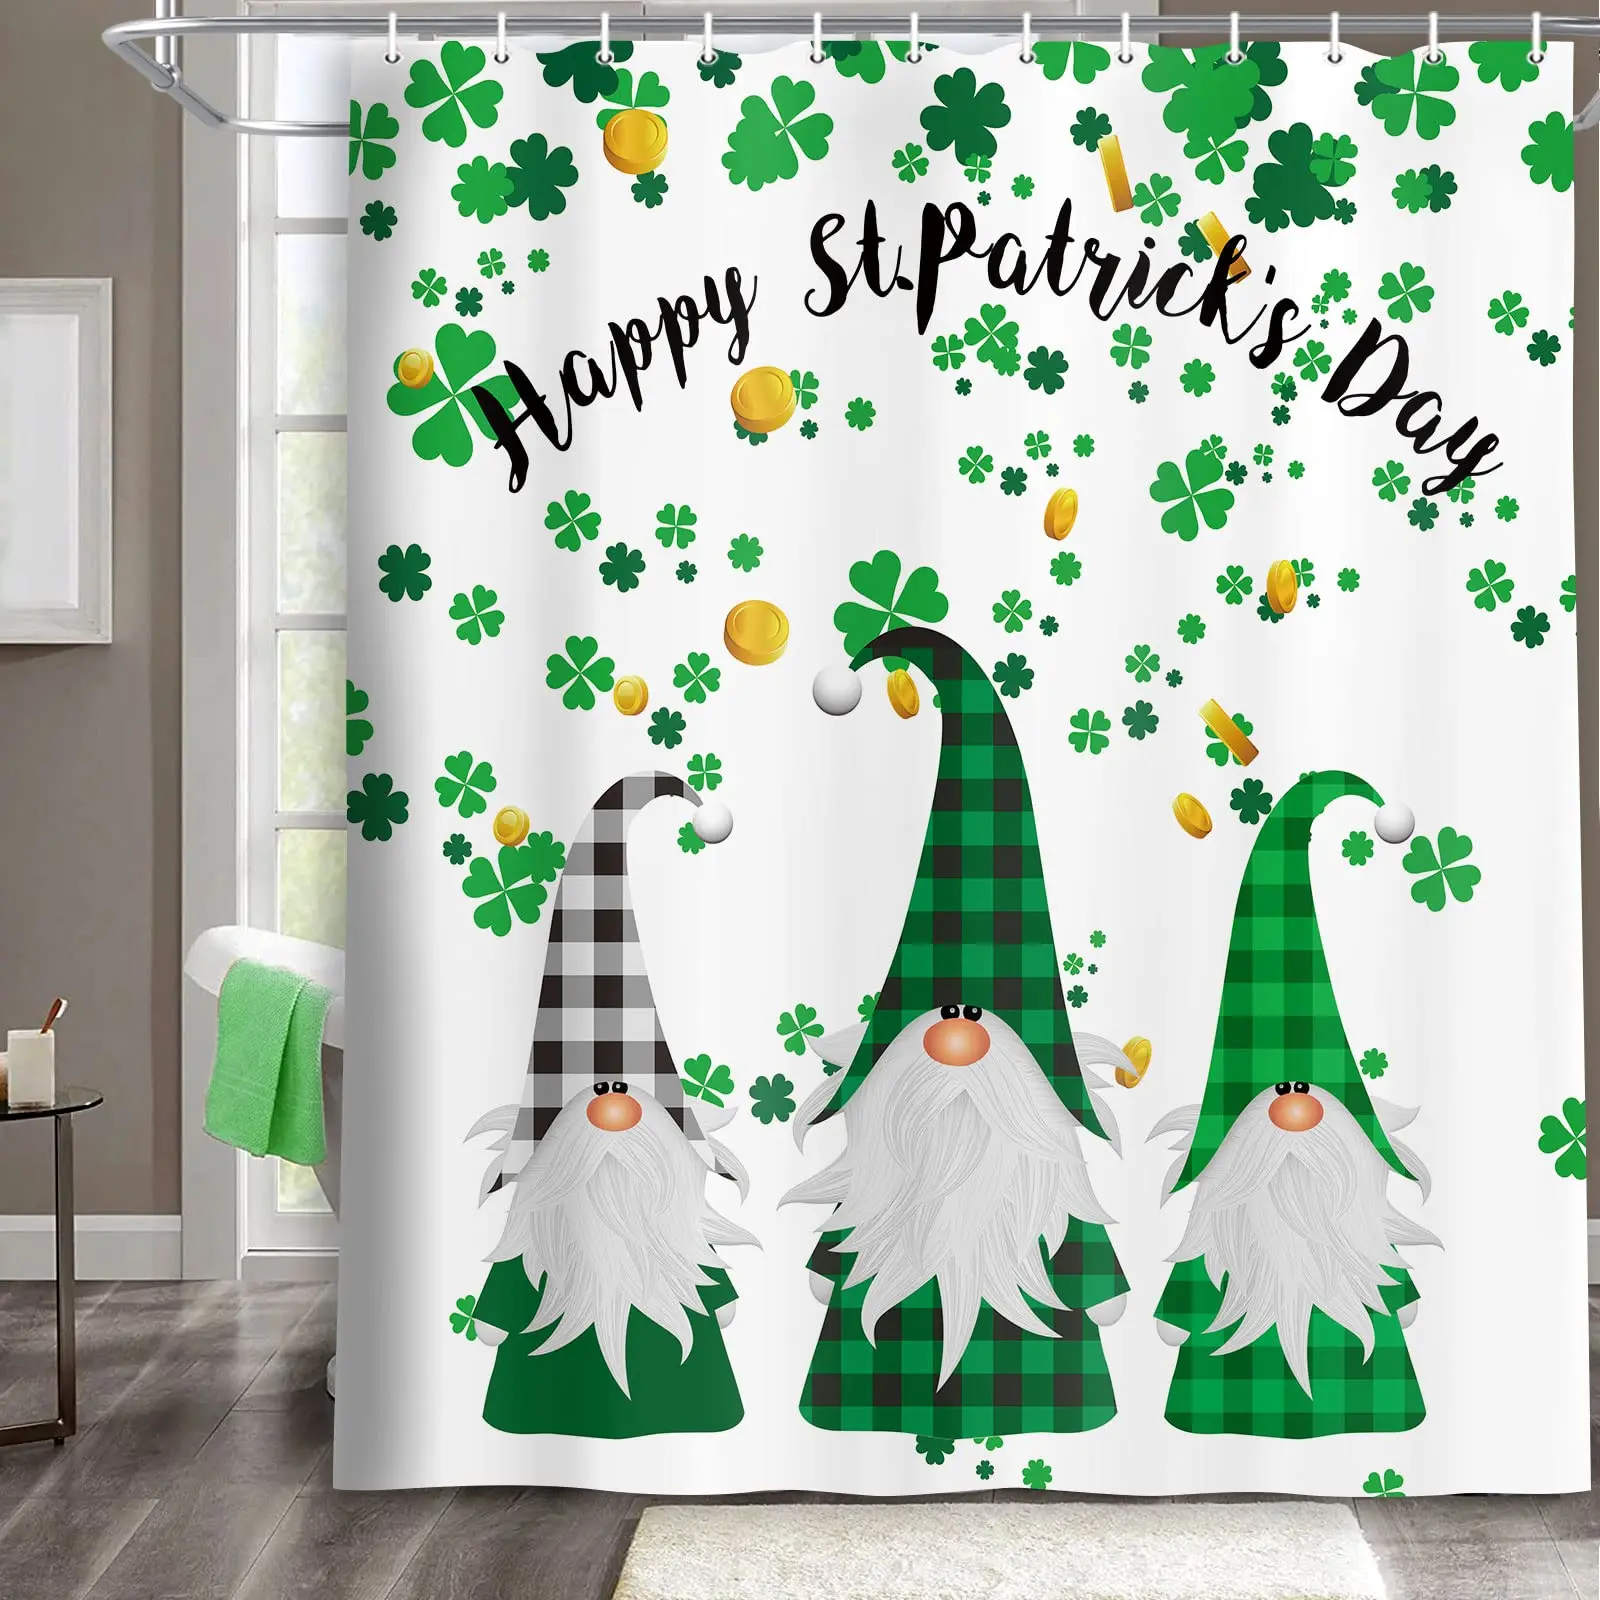 

Happy St. Patrick's Day Shower Curtain, Green Clover Shamrock Leaf Irish Gnome Elf Buffalo Check Plaid Fabric Bathroom Curtains